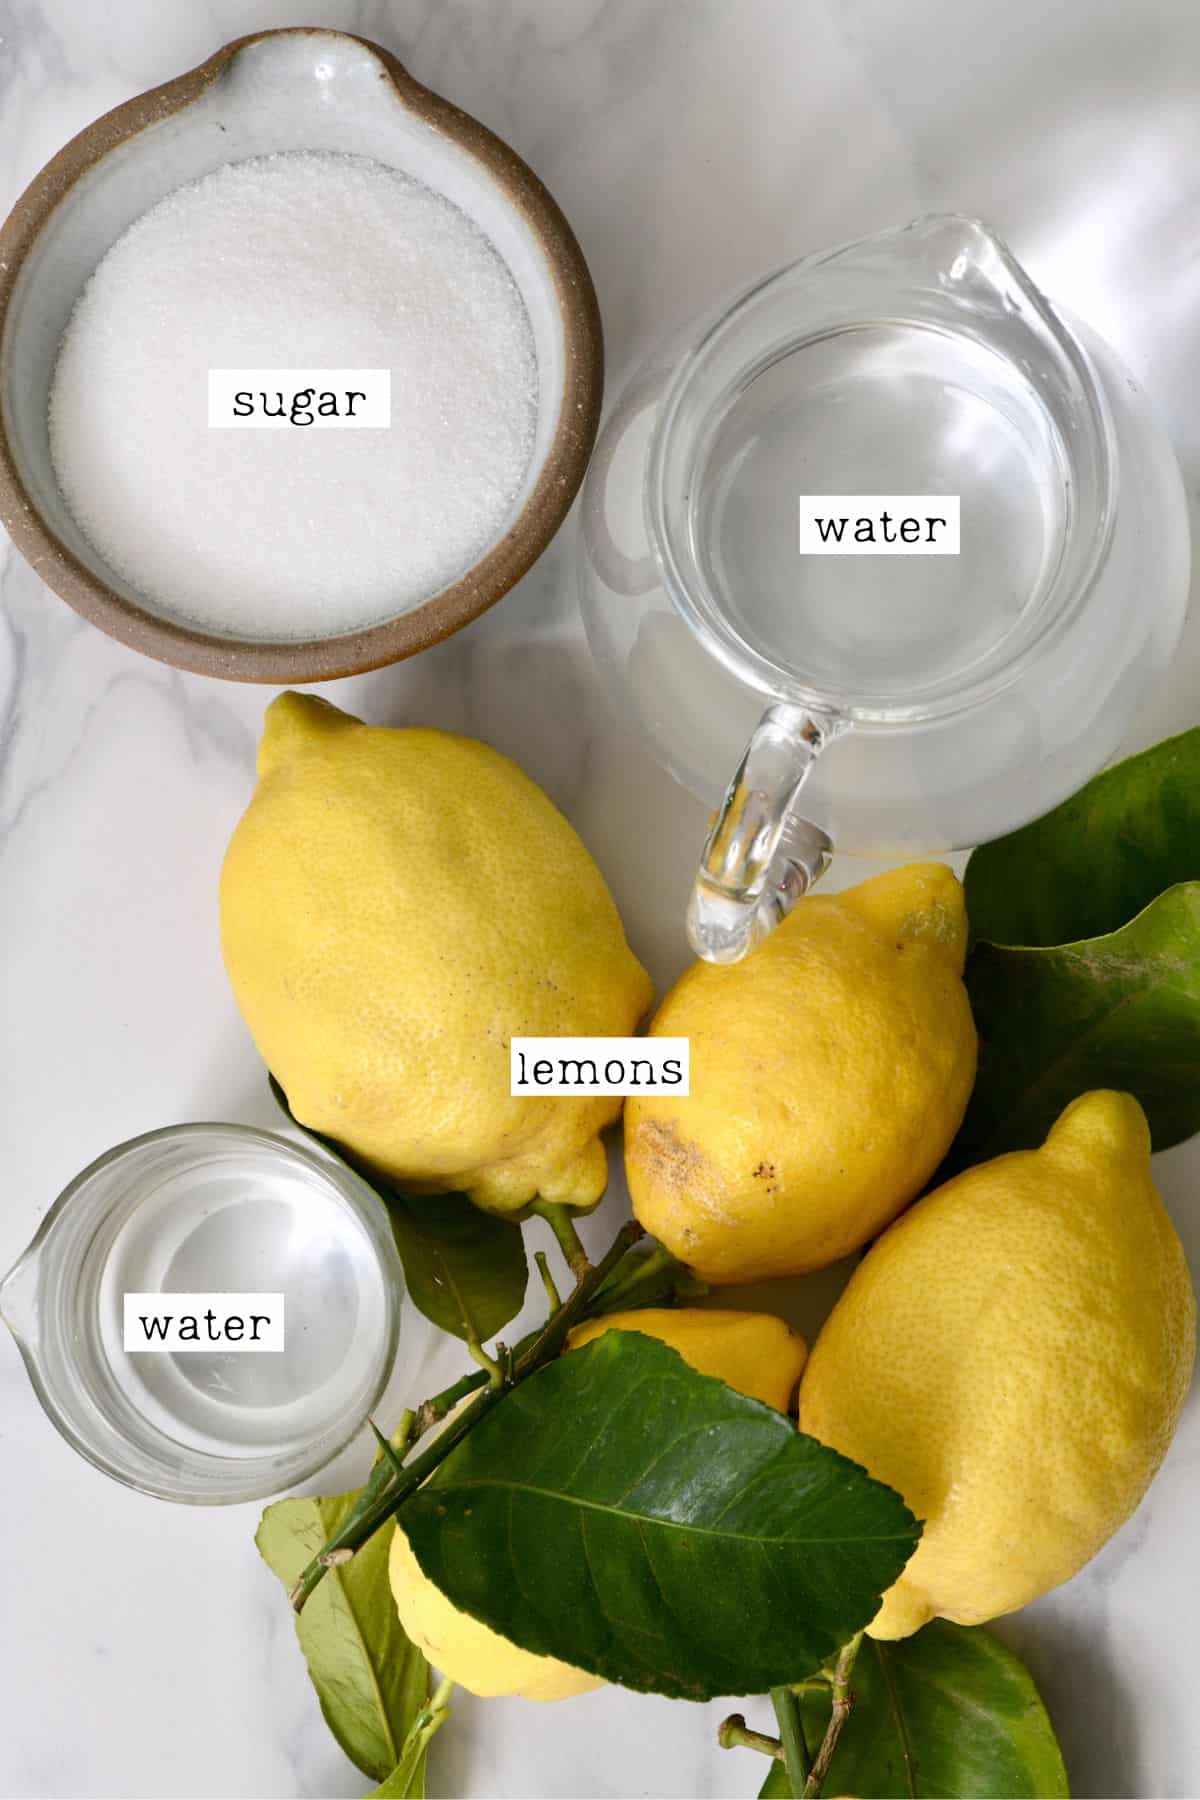 Ingredients for homemade lemonade